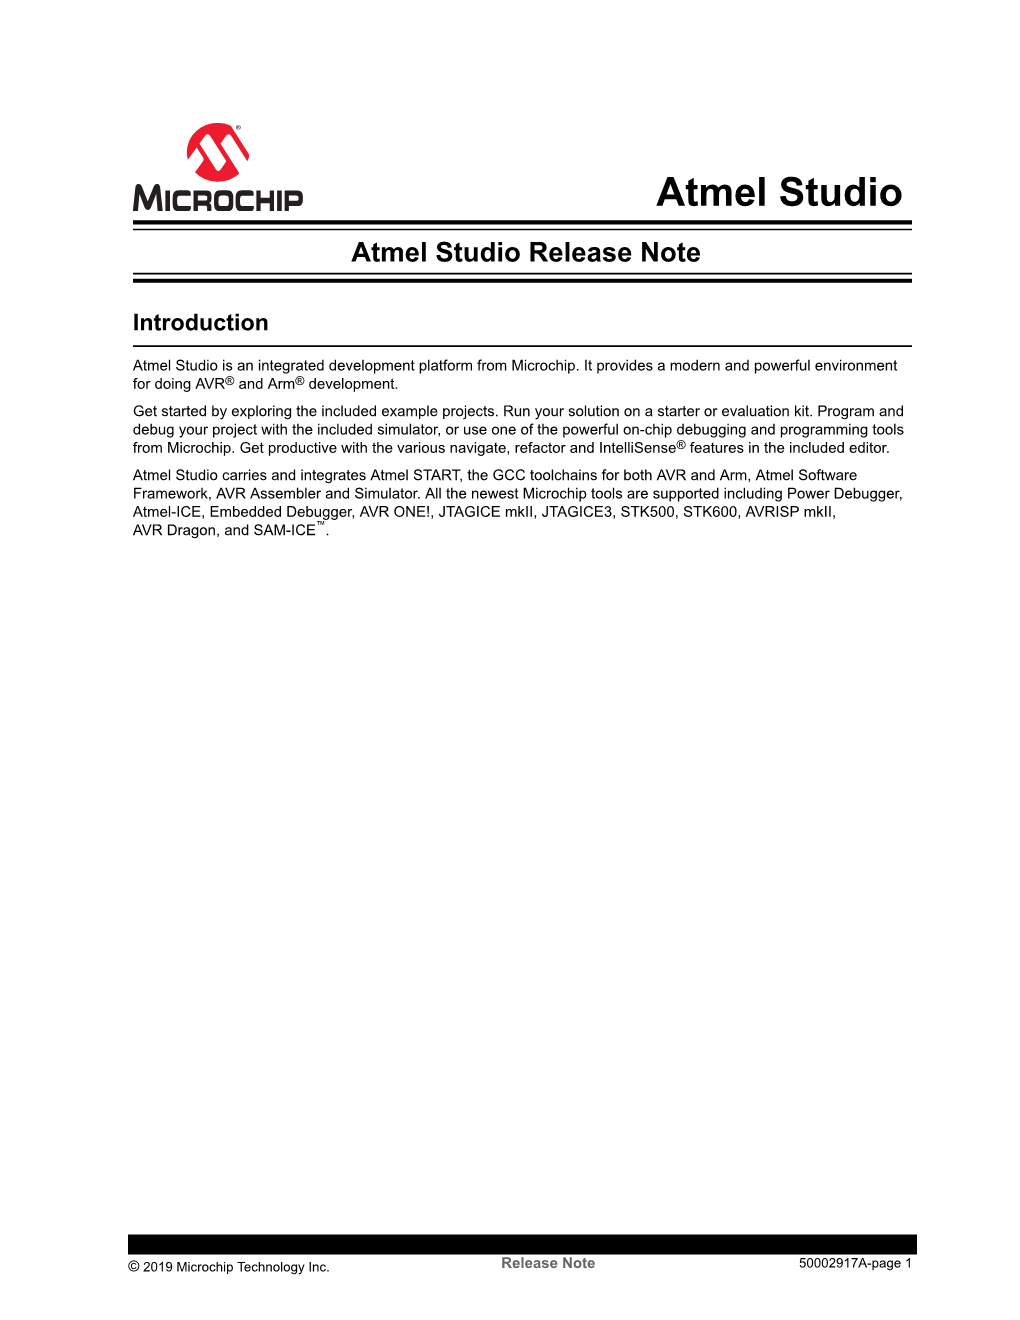 Atmel Studio Atmel Studio Release Note